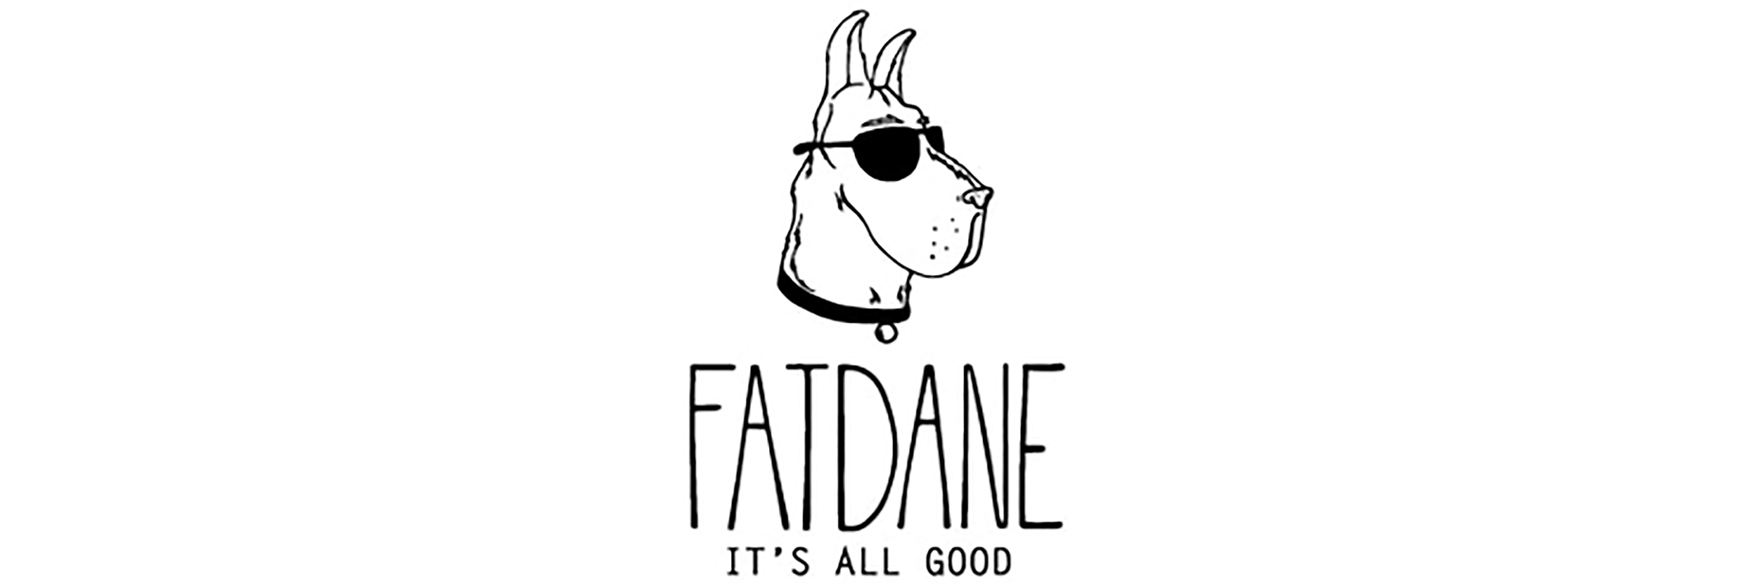 Fatdane